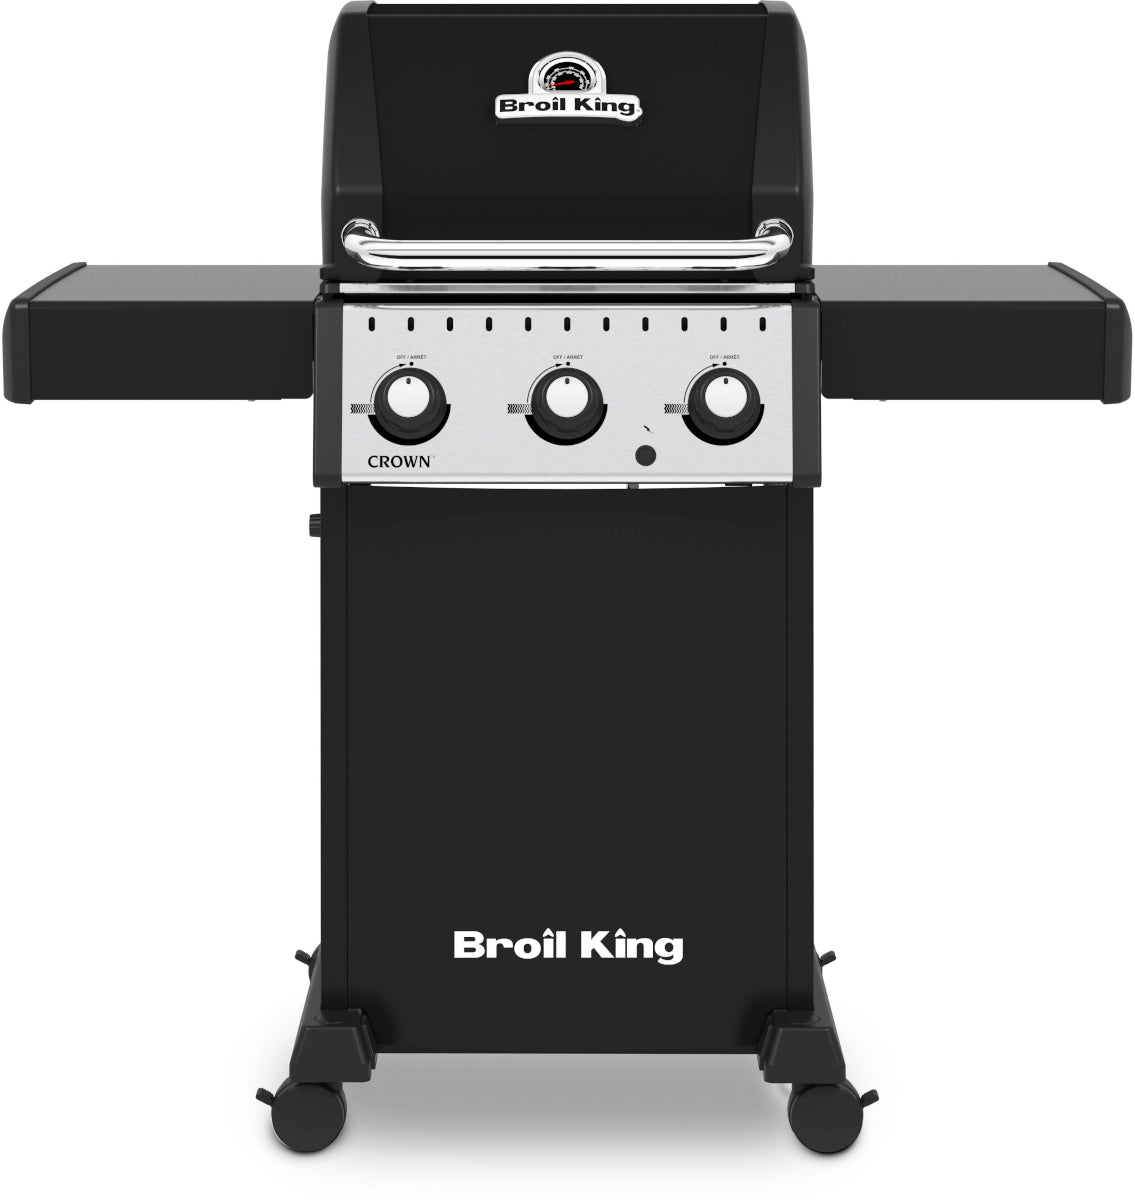 Broil King Crown 310 - 3 main burners